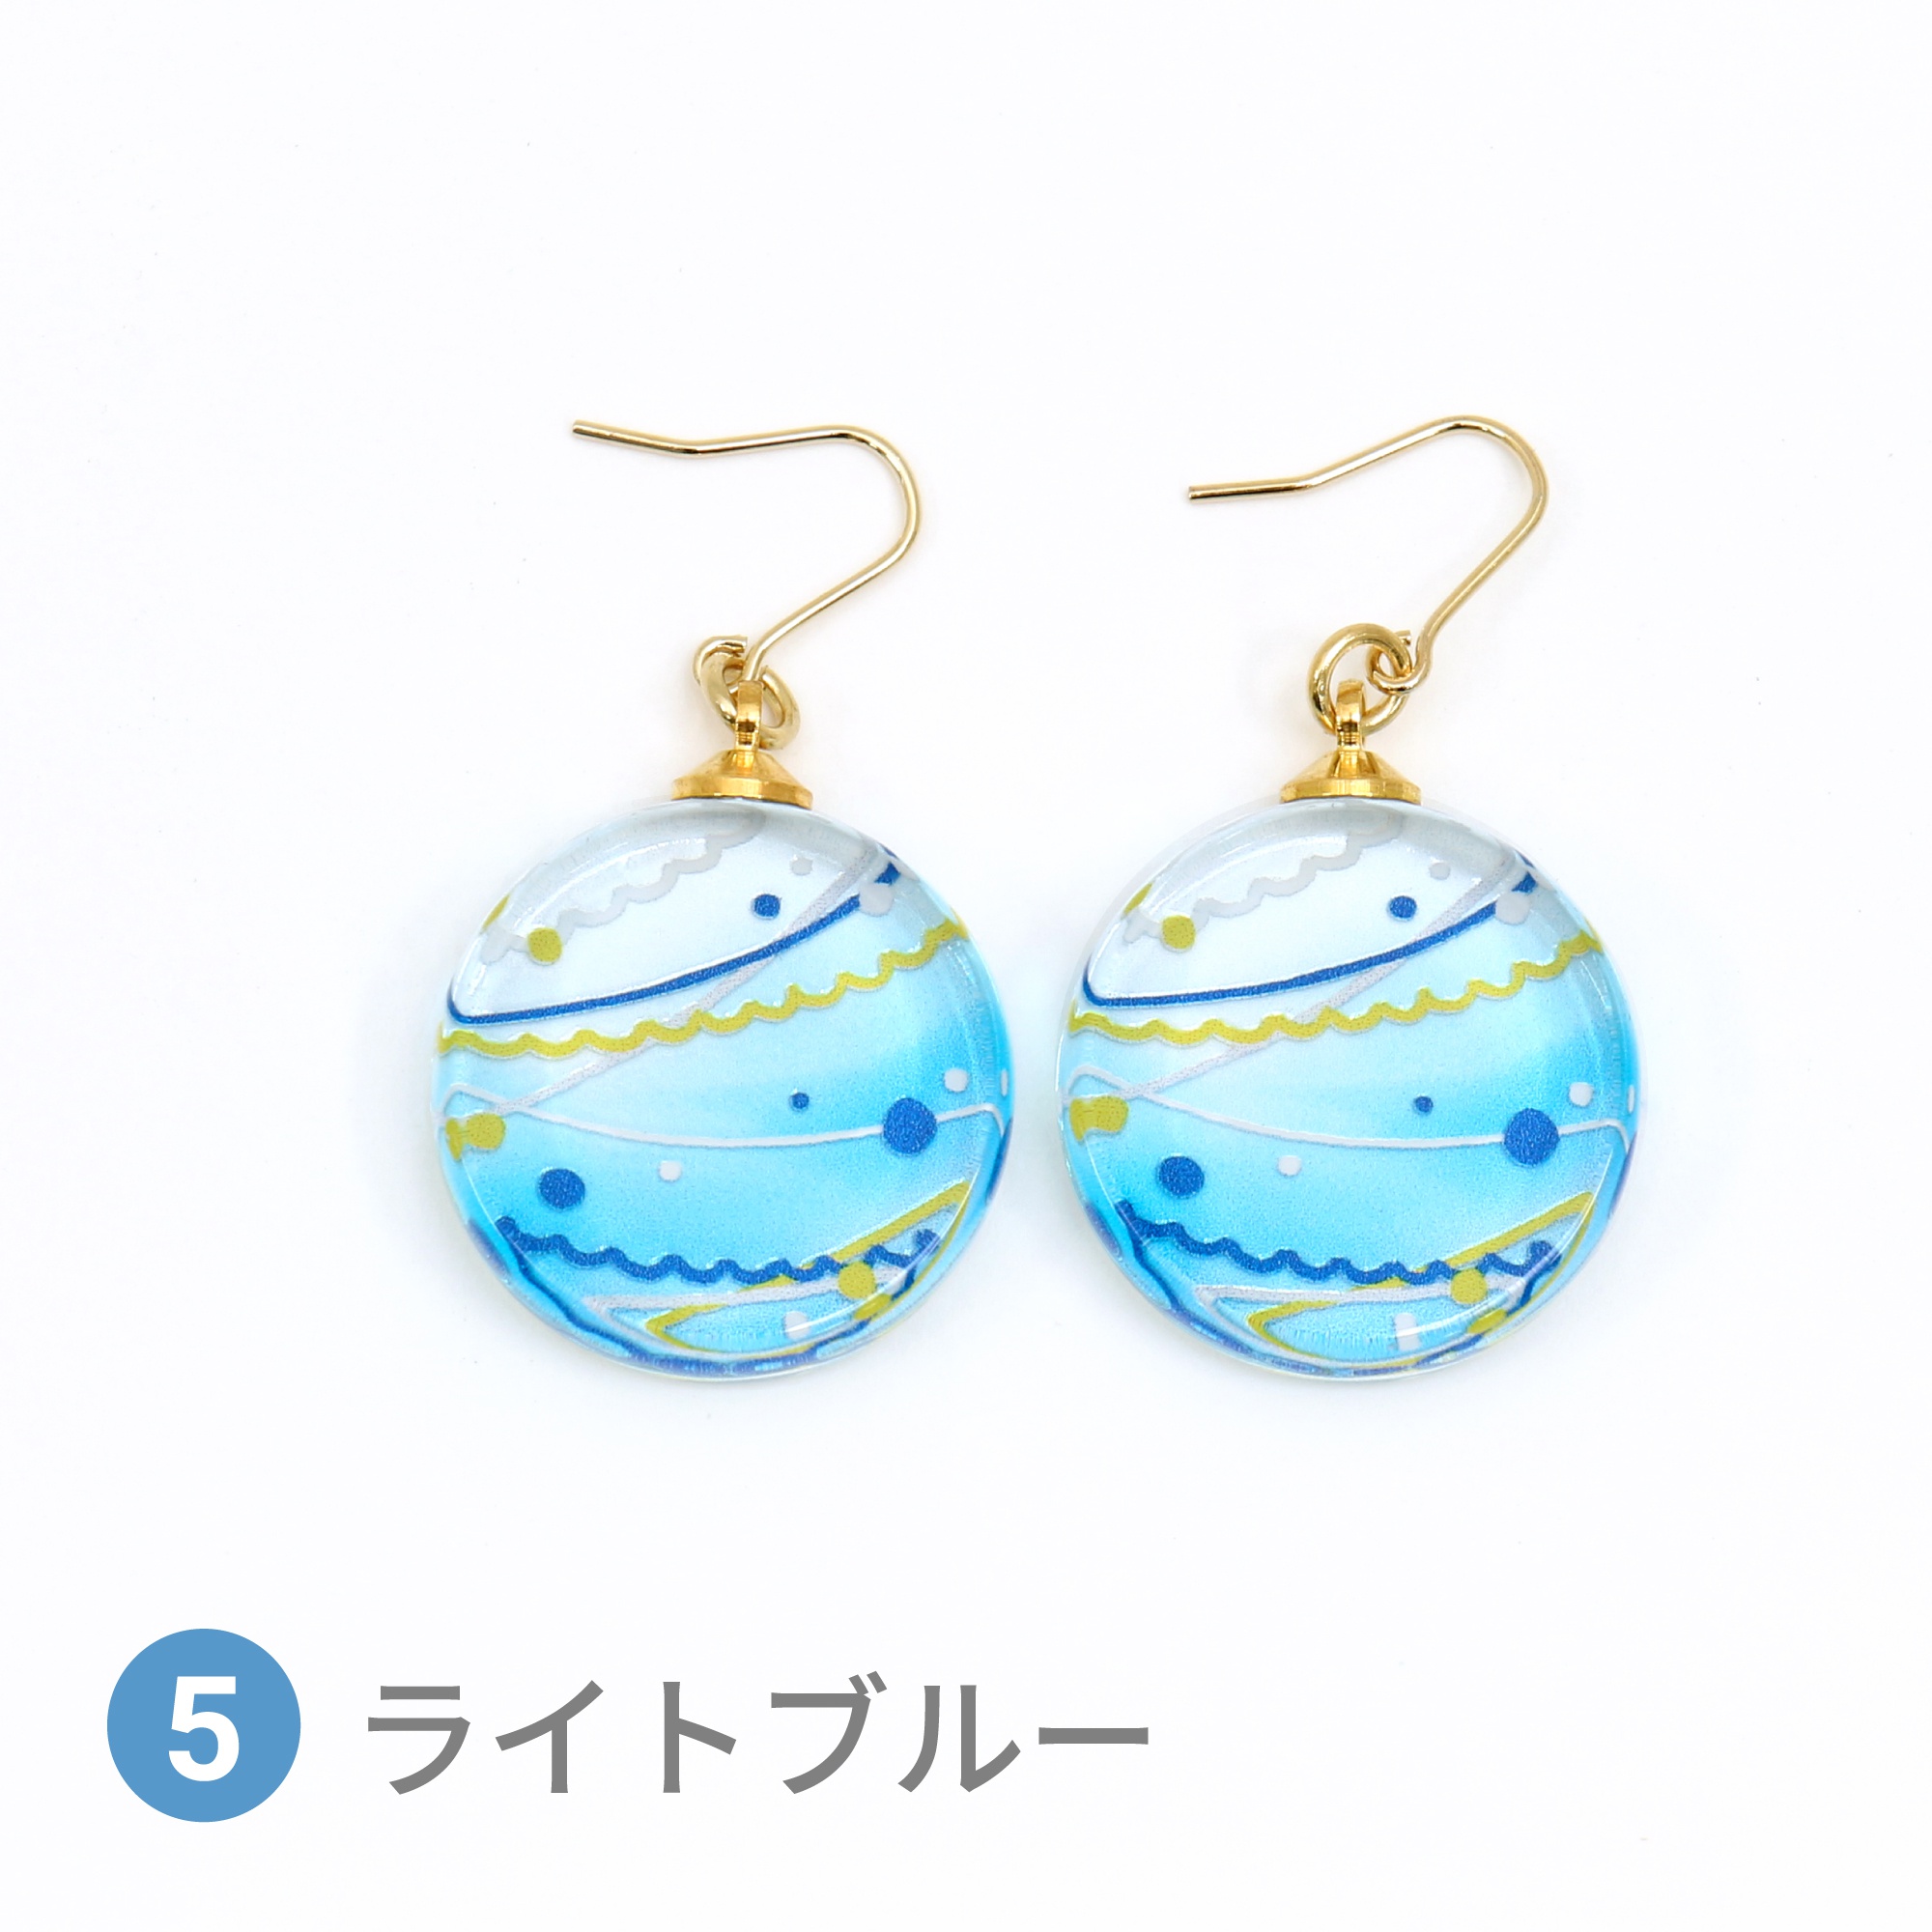 Glass accessories Pierced Earring WATER BALLOON lightblue round shape